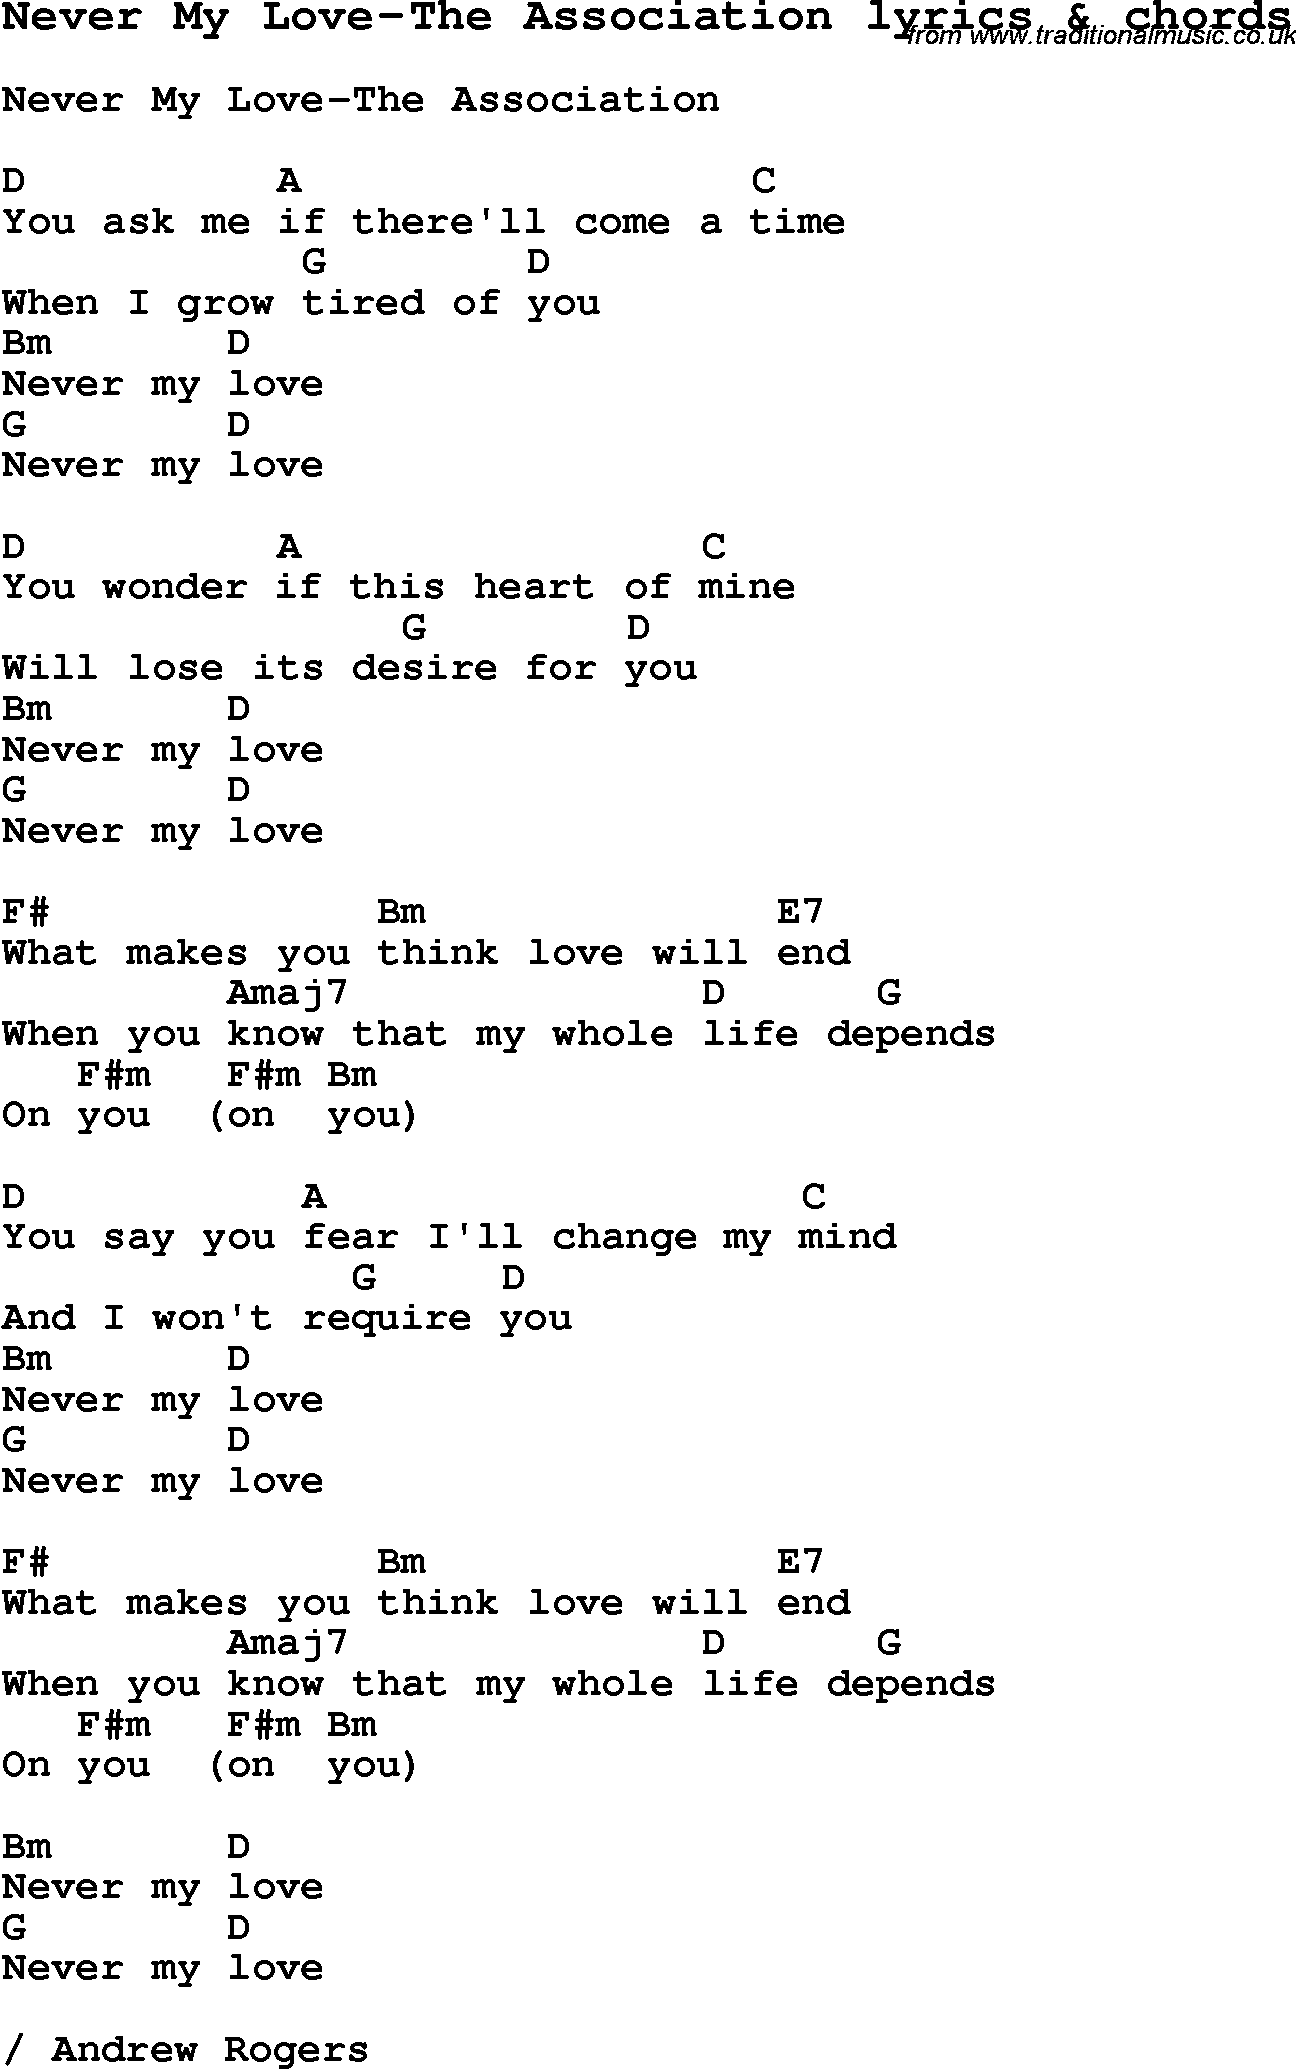 Love Song Lyrics for: Never My Love-The Association with chords for Ukulele, Guitar Banjo etc.